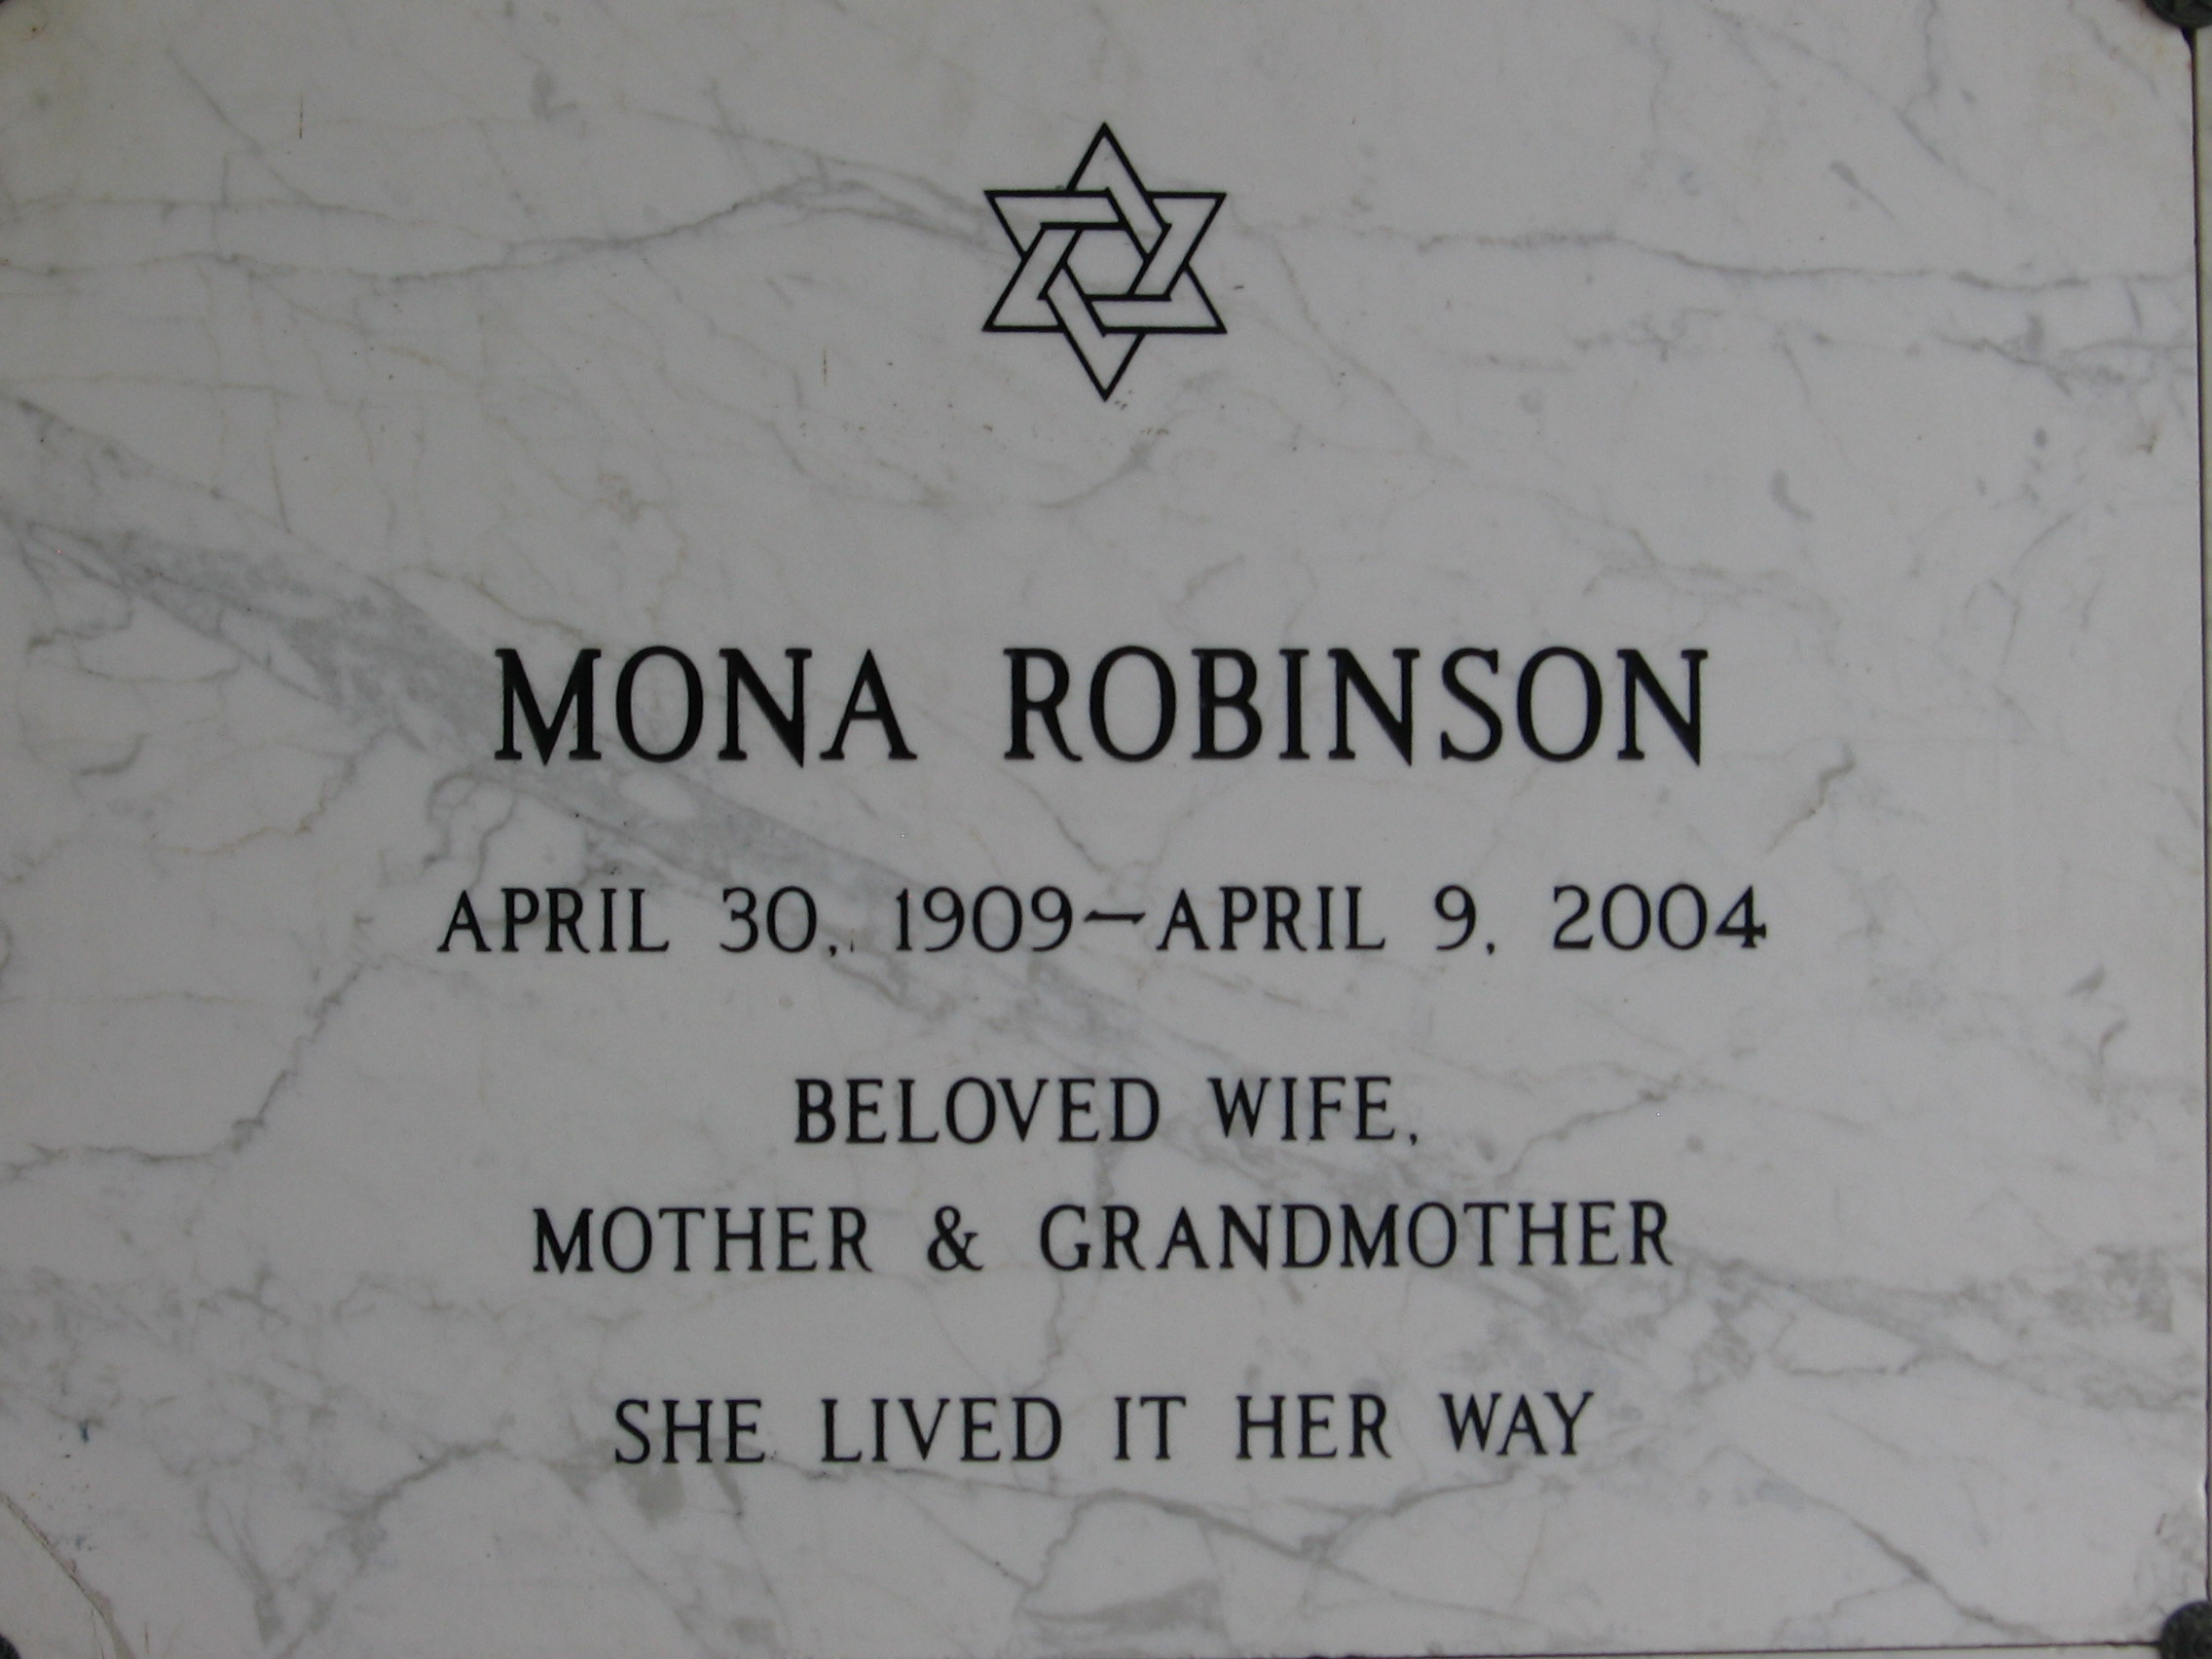 Mona Robinson